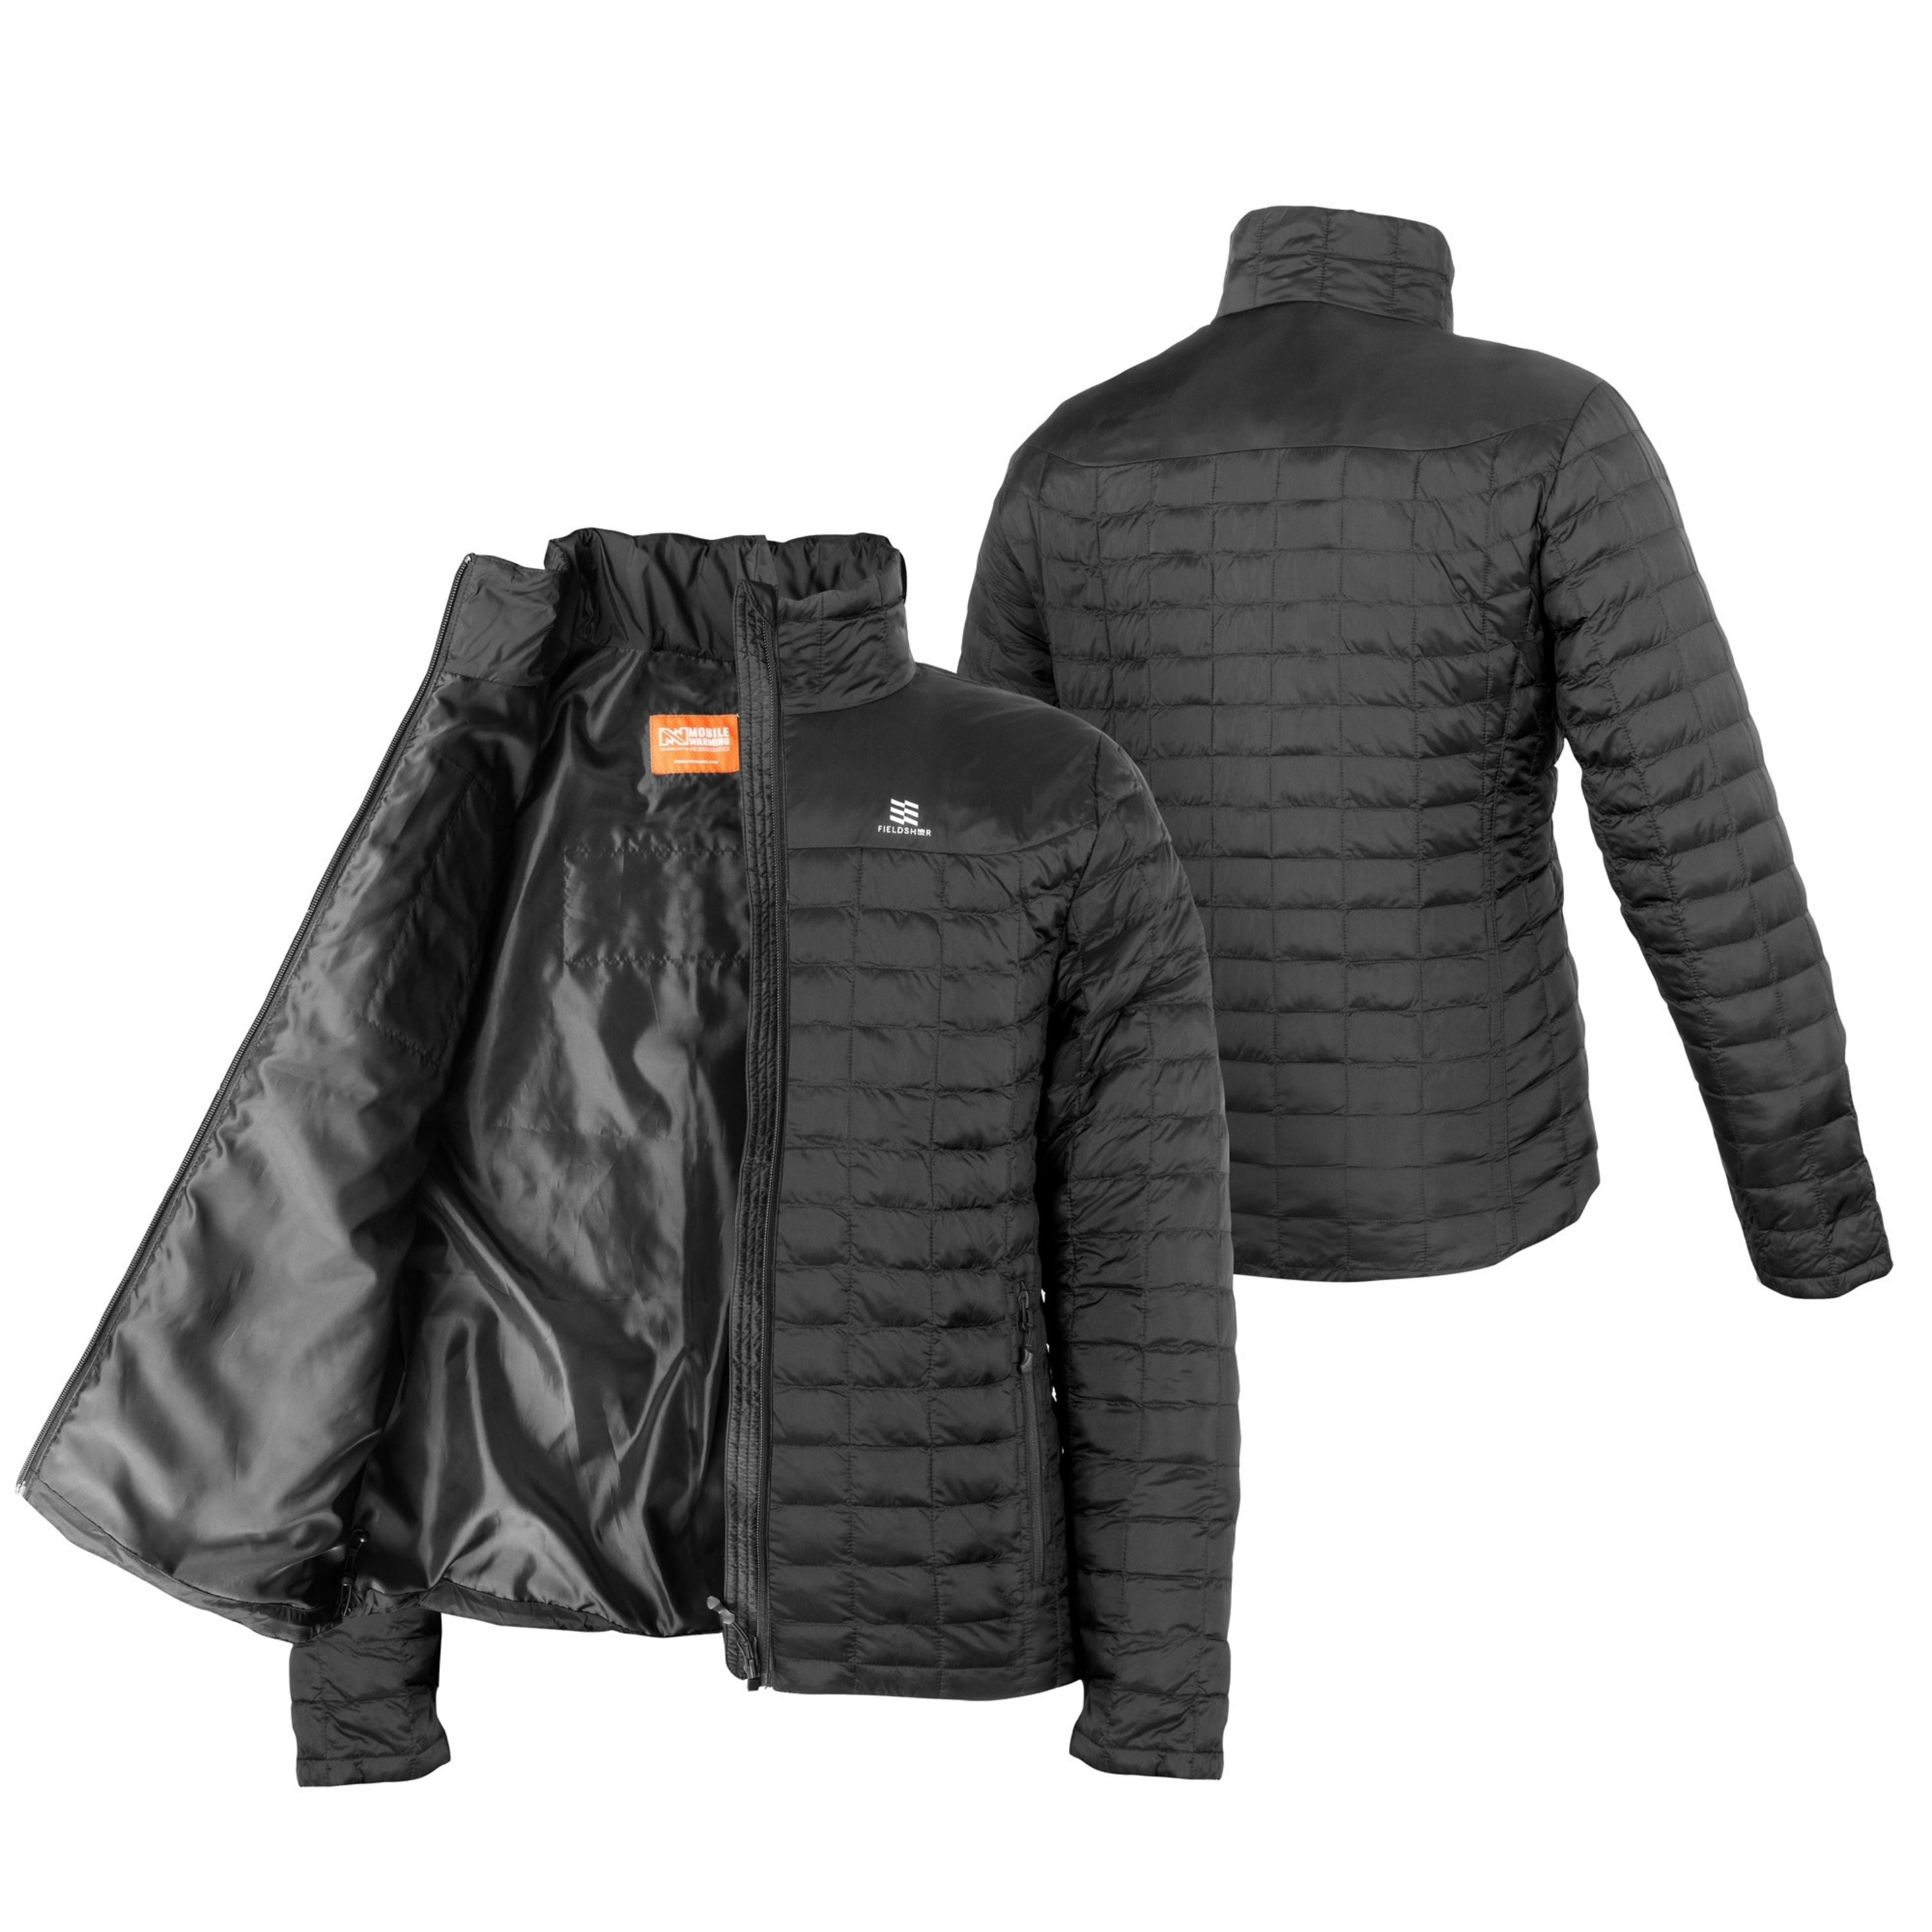 Manteau chauffant "Backcountry" - Homme||"Backcountry" heated jacket - Men’s